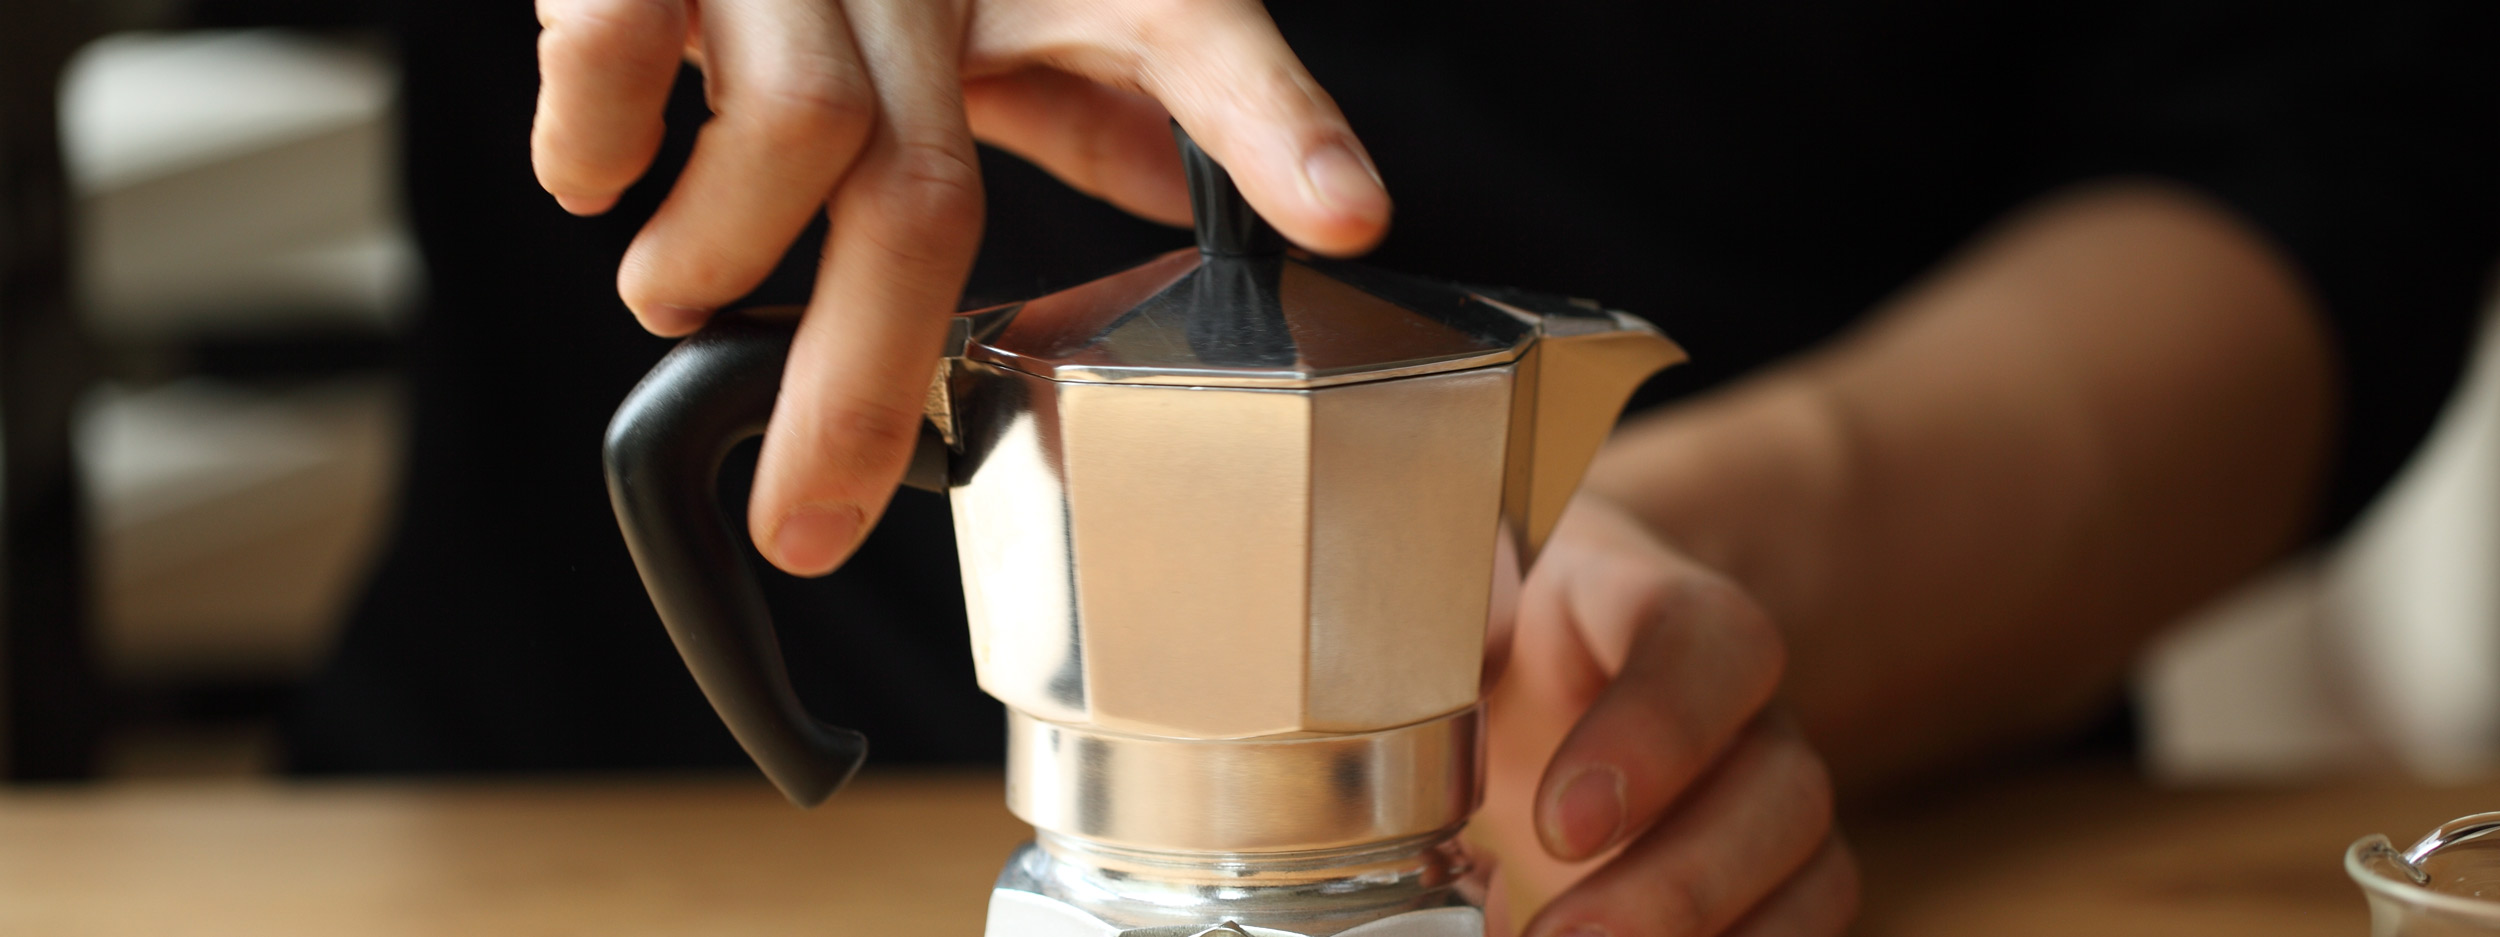 How To Properly Clean A Moka Pot Espresso Maker 